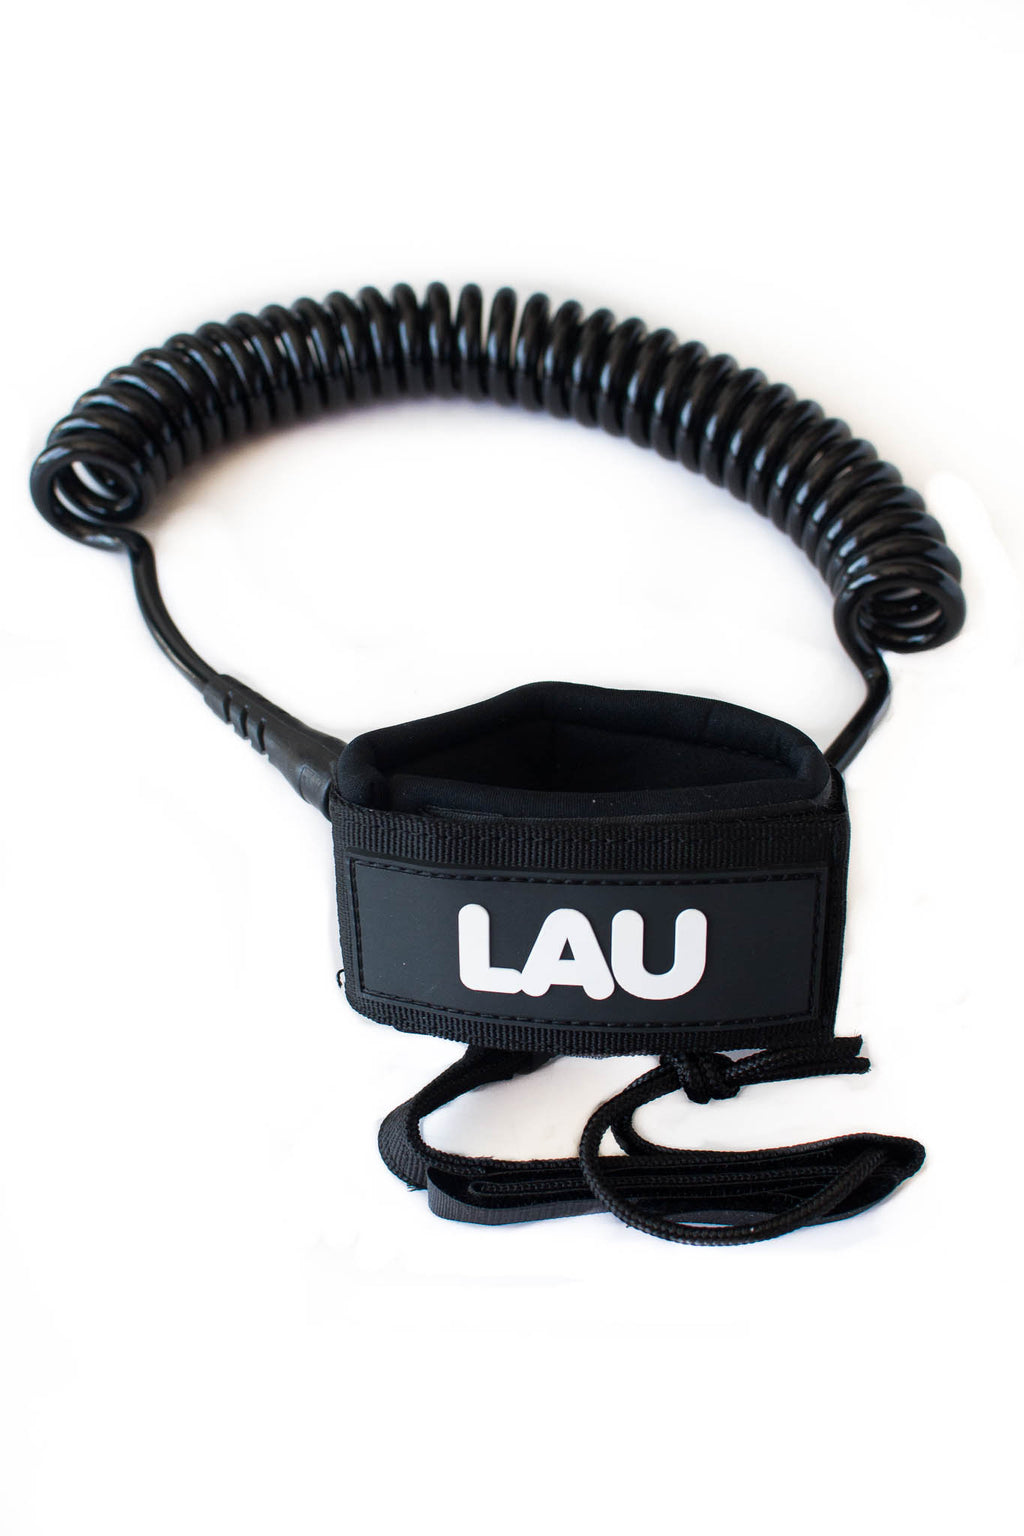 Leash coil style leash